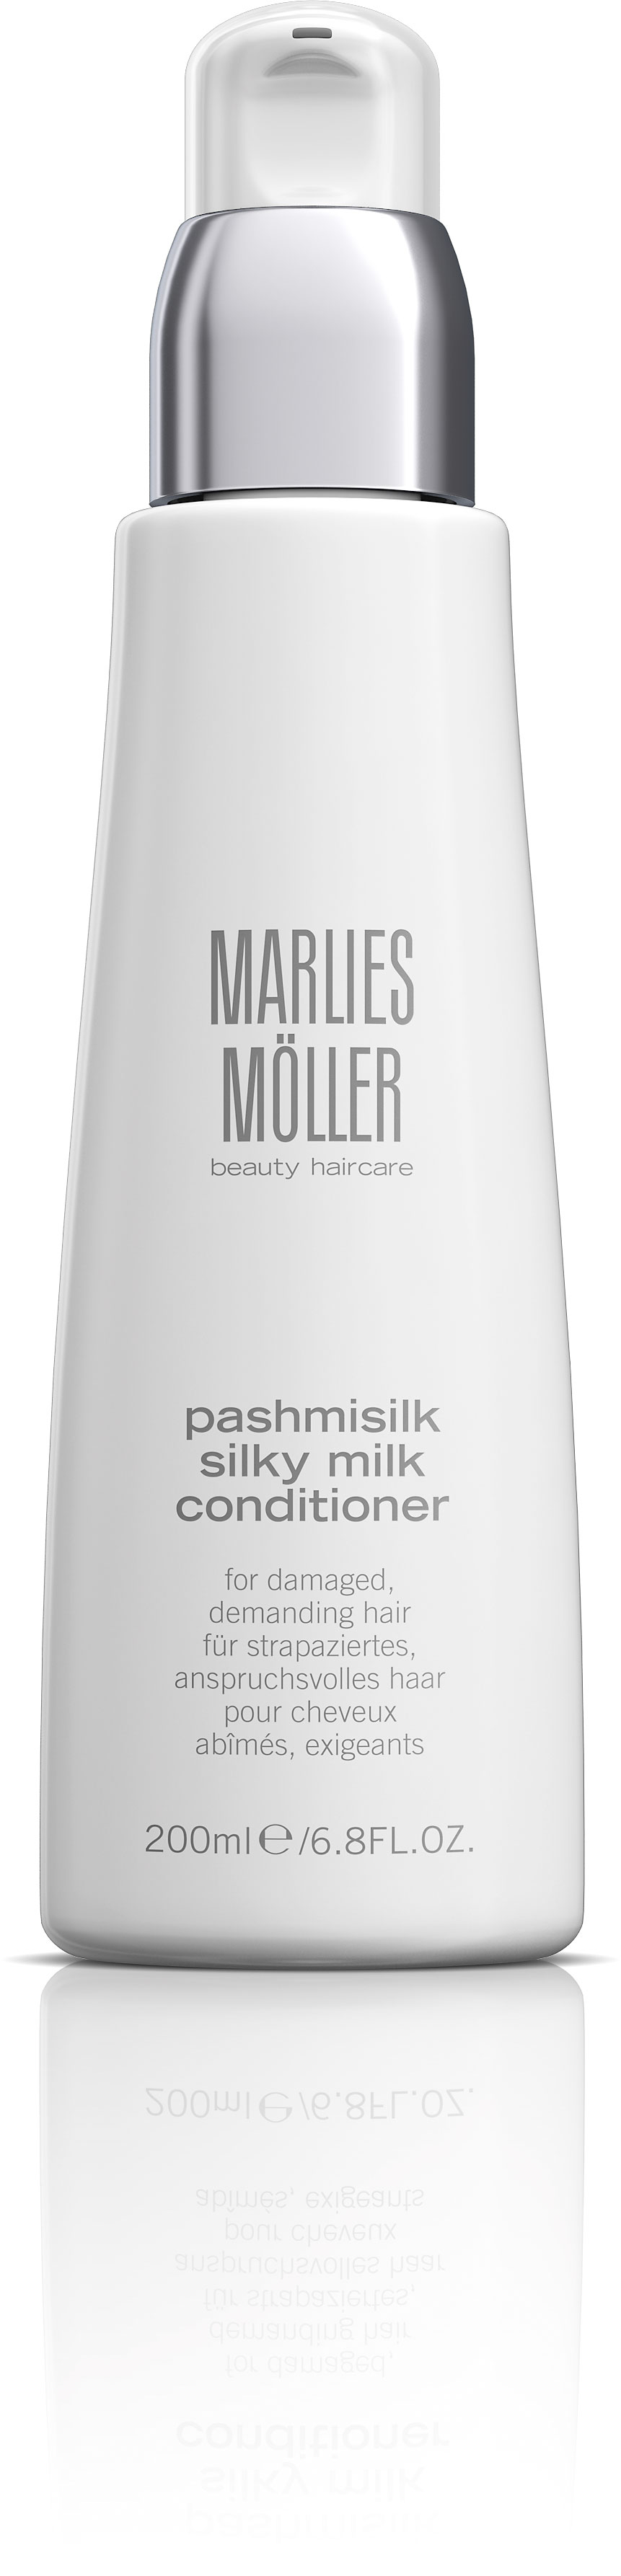 Marlies Möller Pash Silk Condition Milk 200 ml